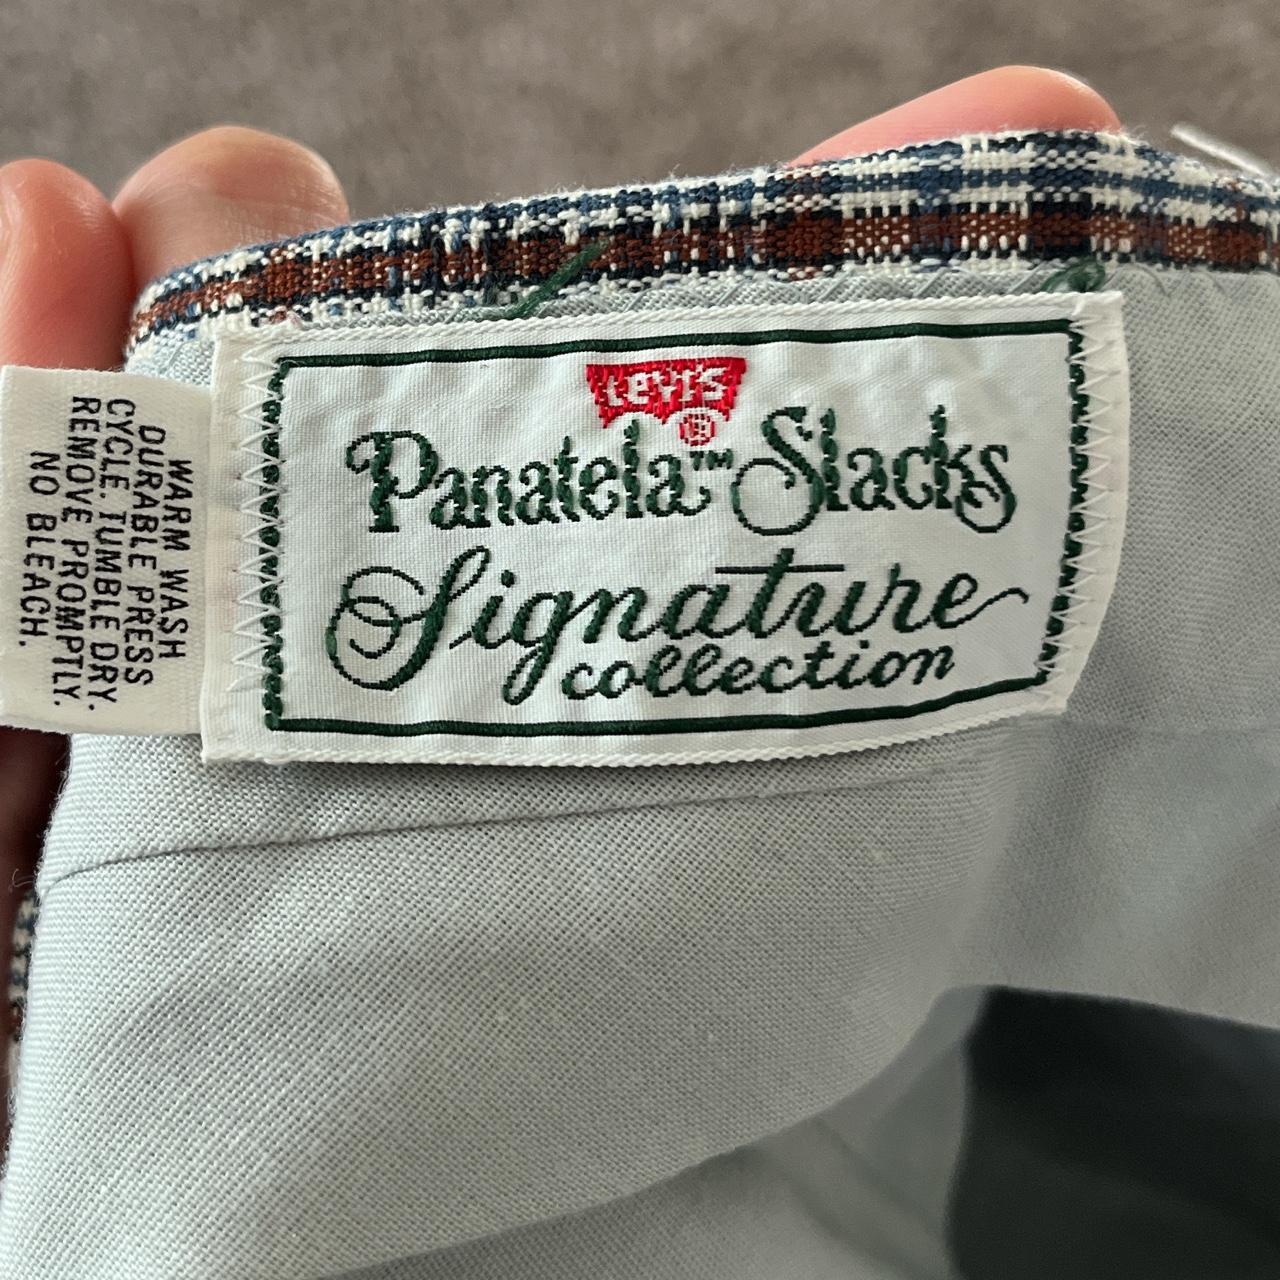 Vintage Levi’s panatela slacks!, - Authentic pair of...